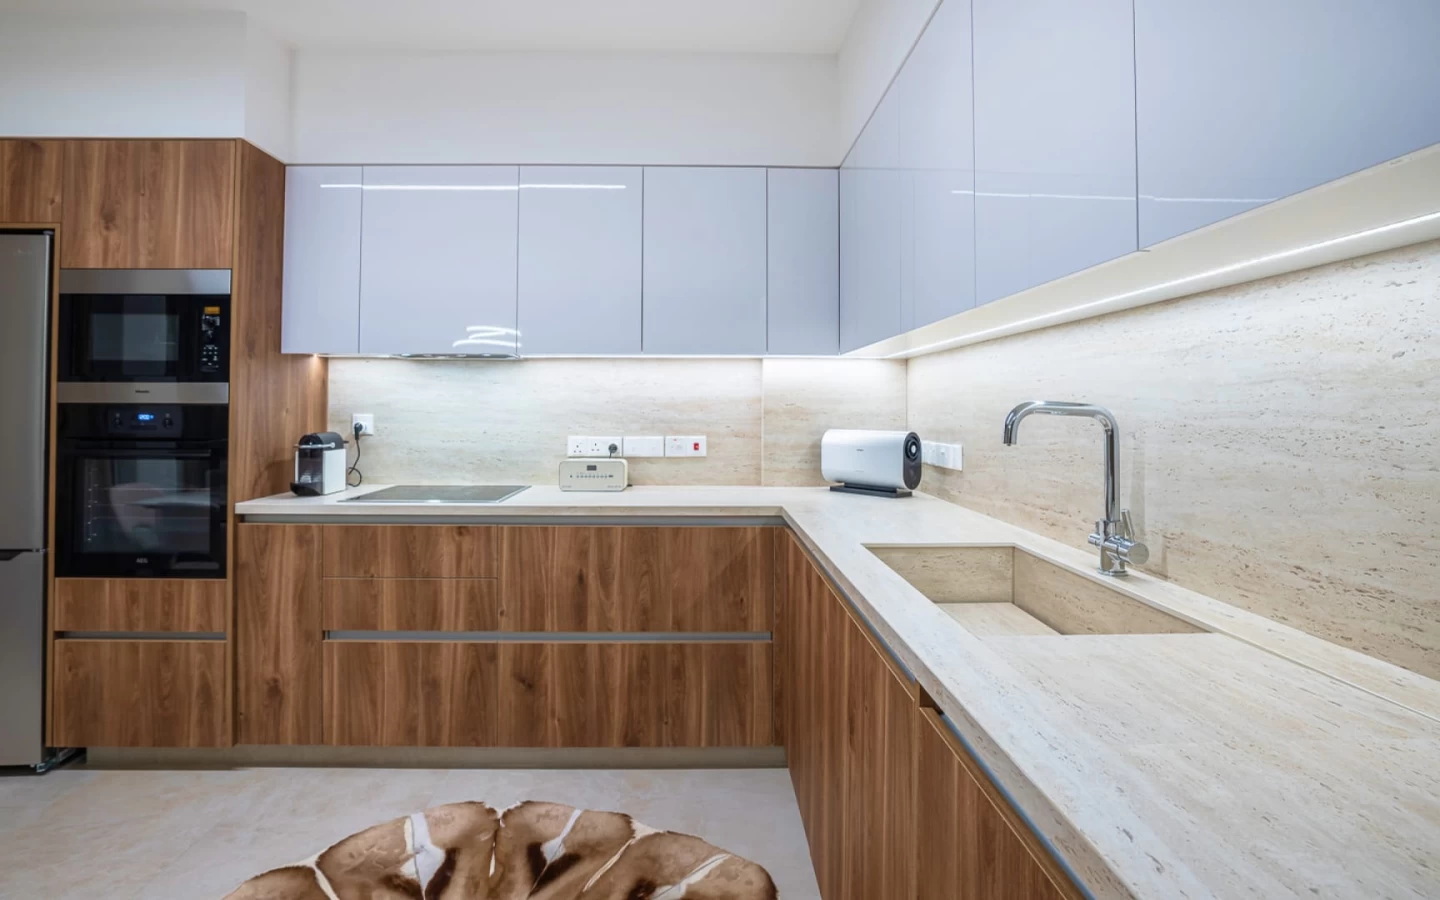 Kitchen worktop in travertine look porcelain stoneware by Atlas Plan